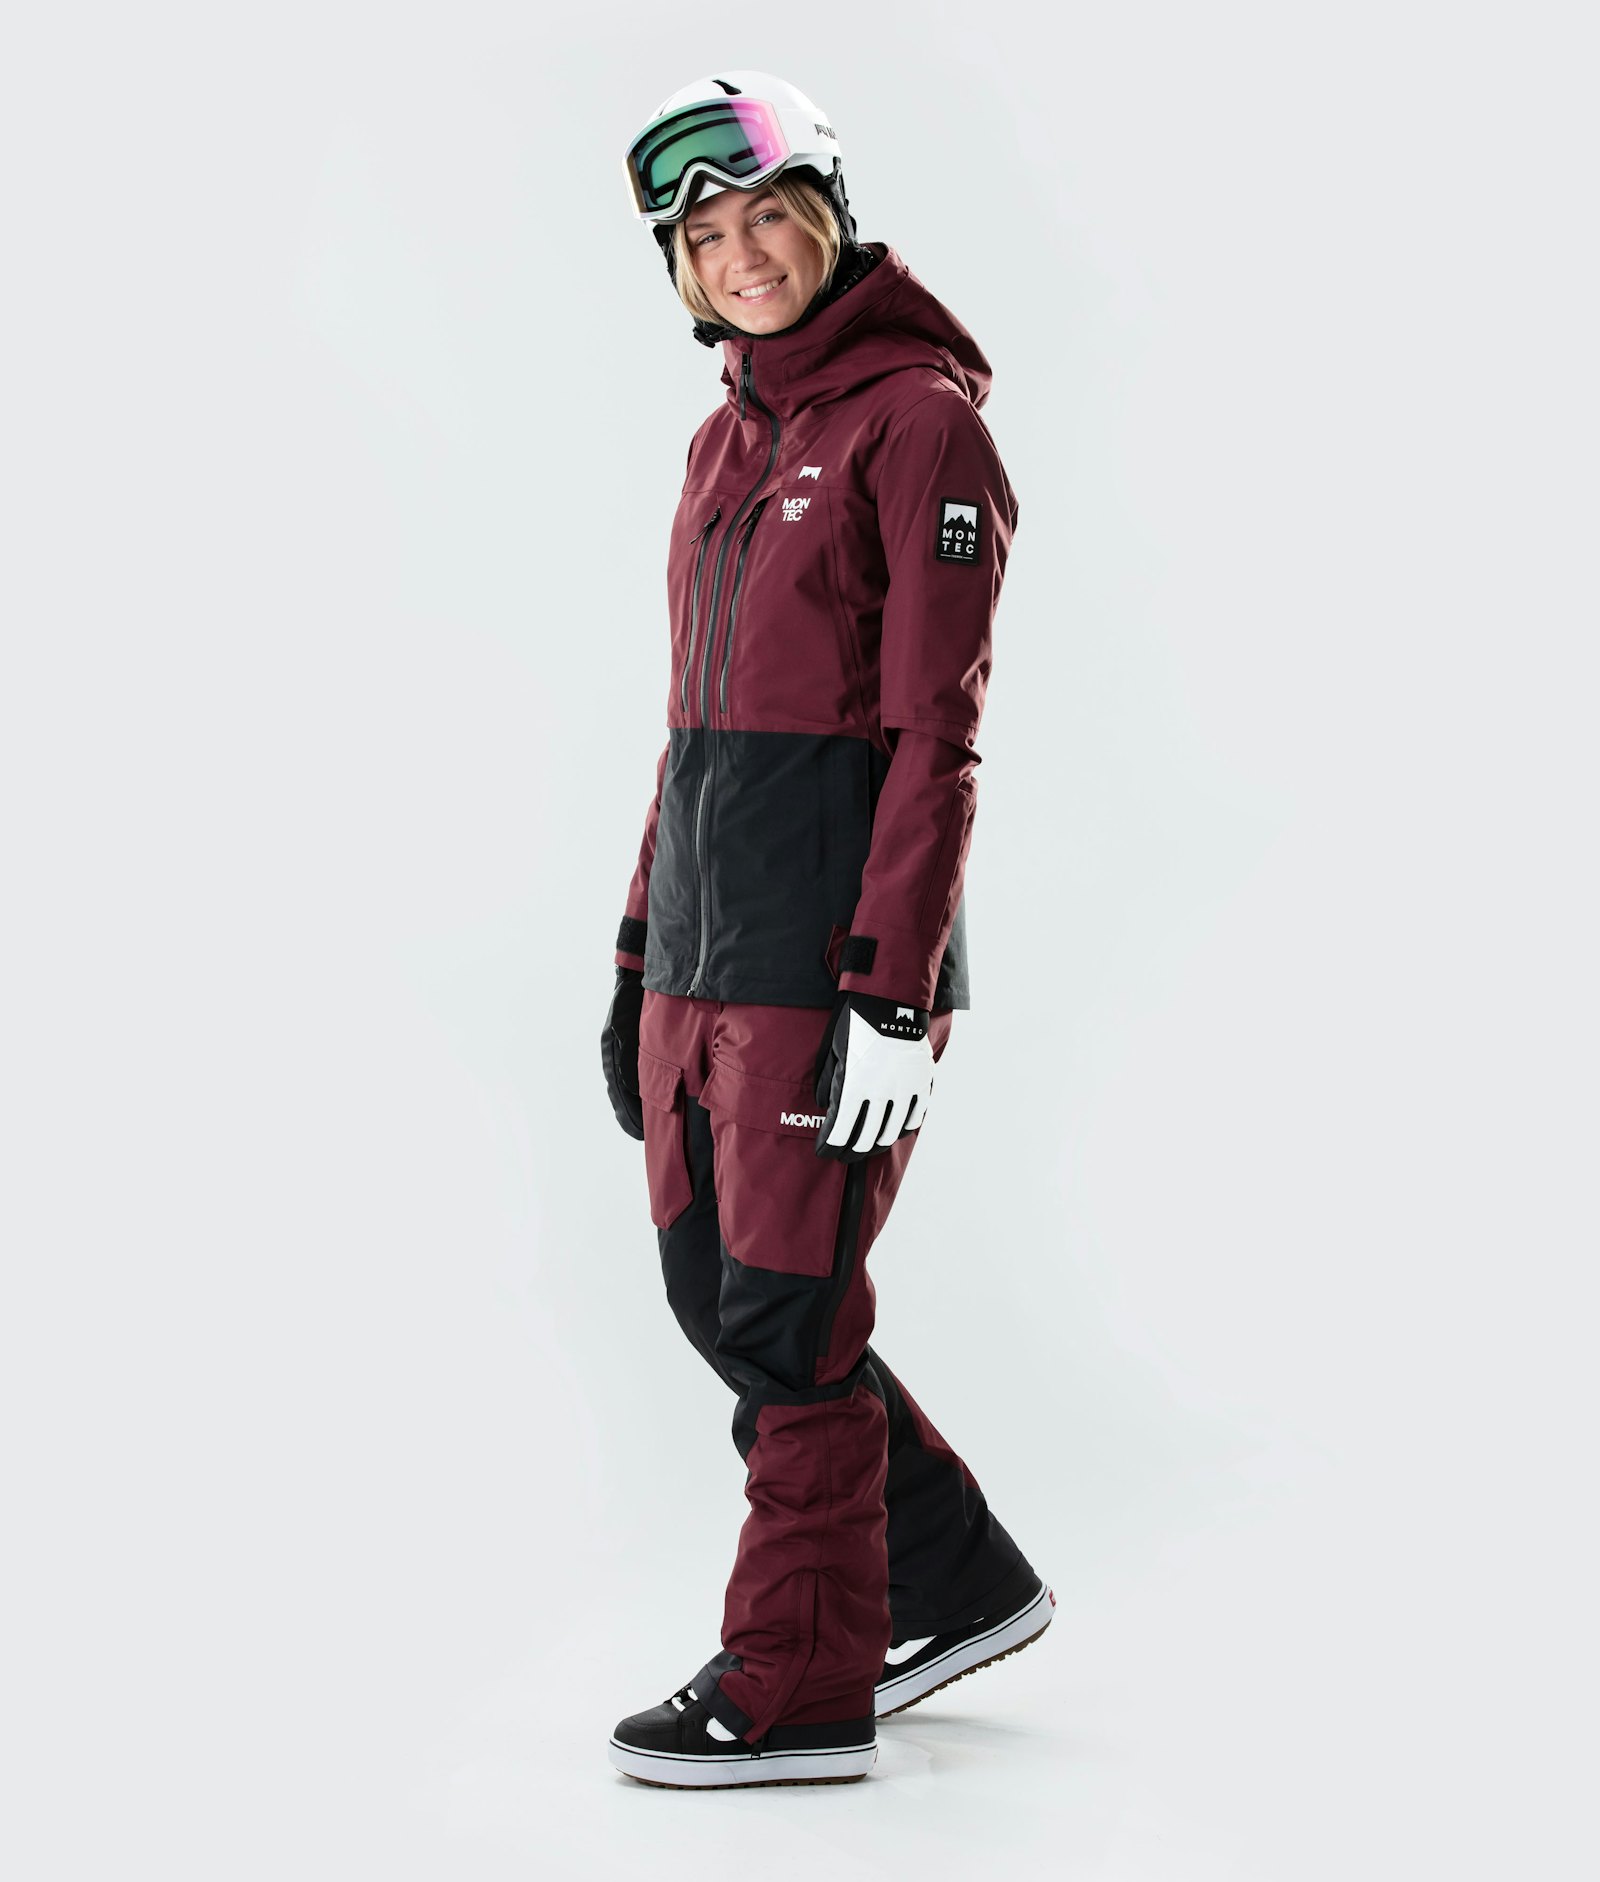 Moss W 2020 Snowboard Jacket Women Burgundy/Black